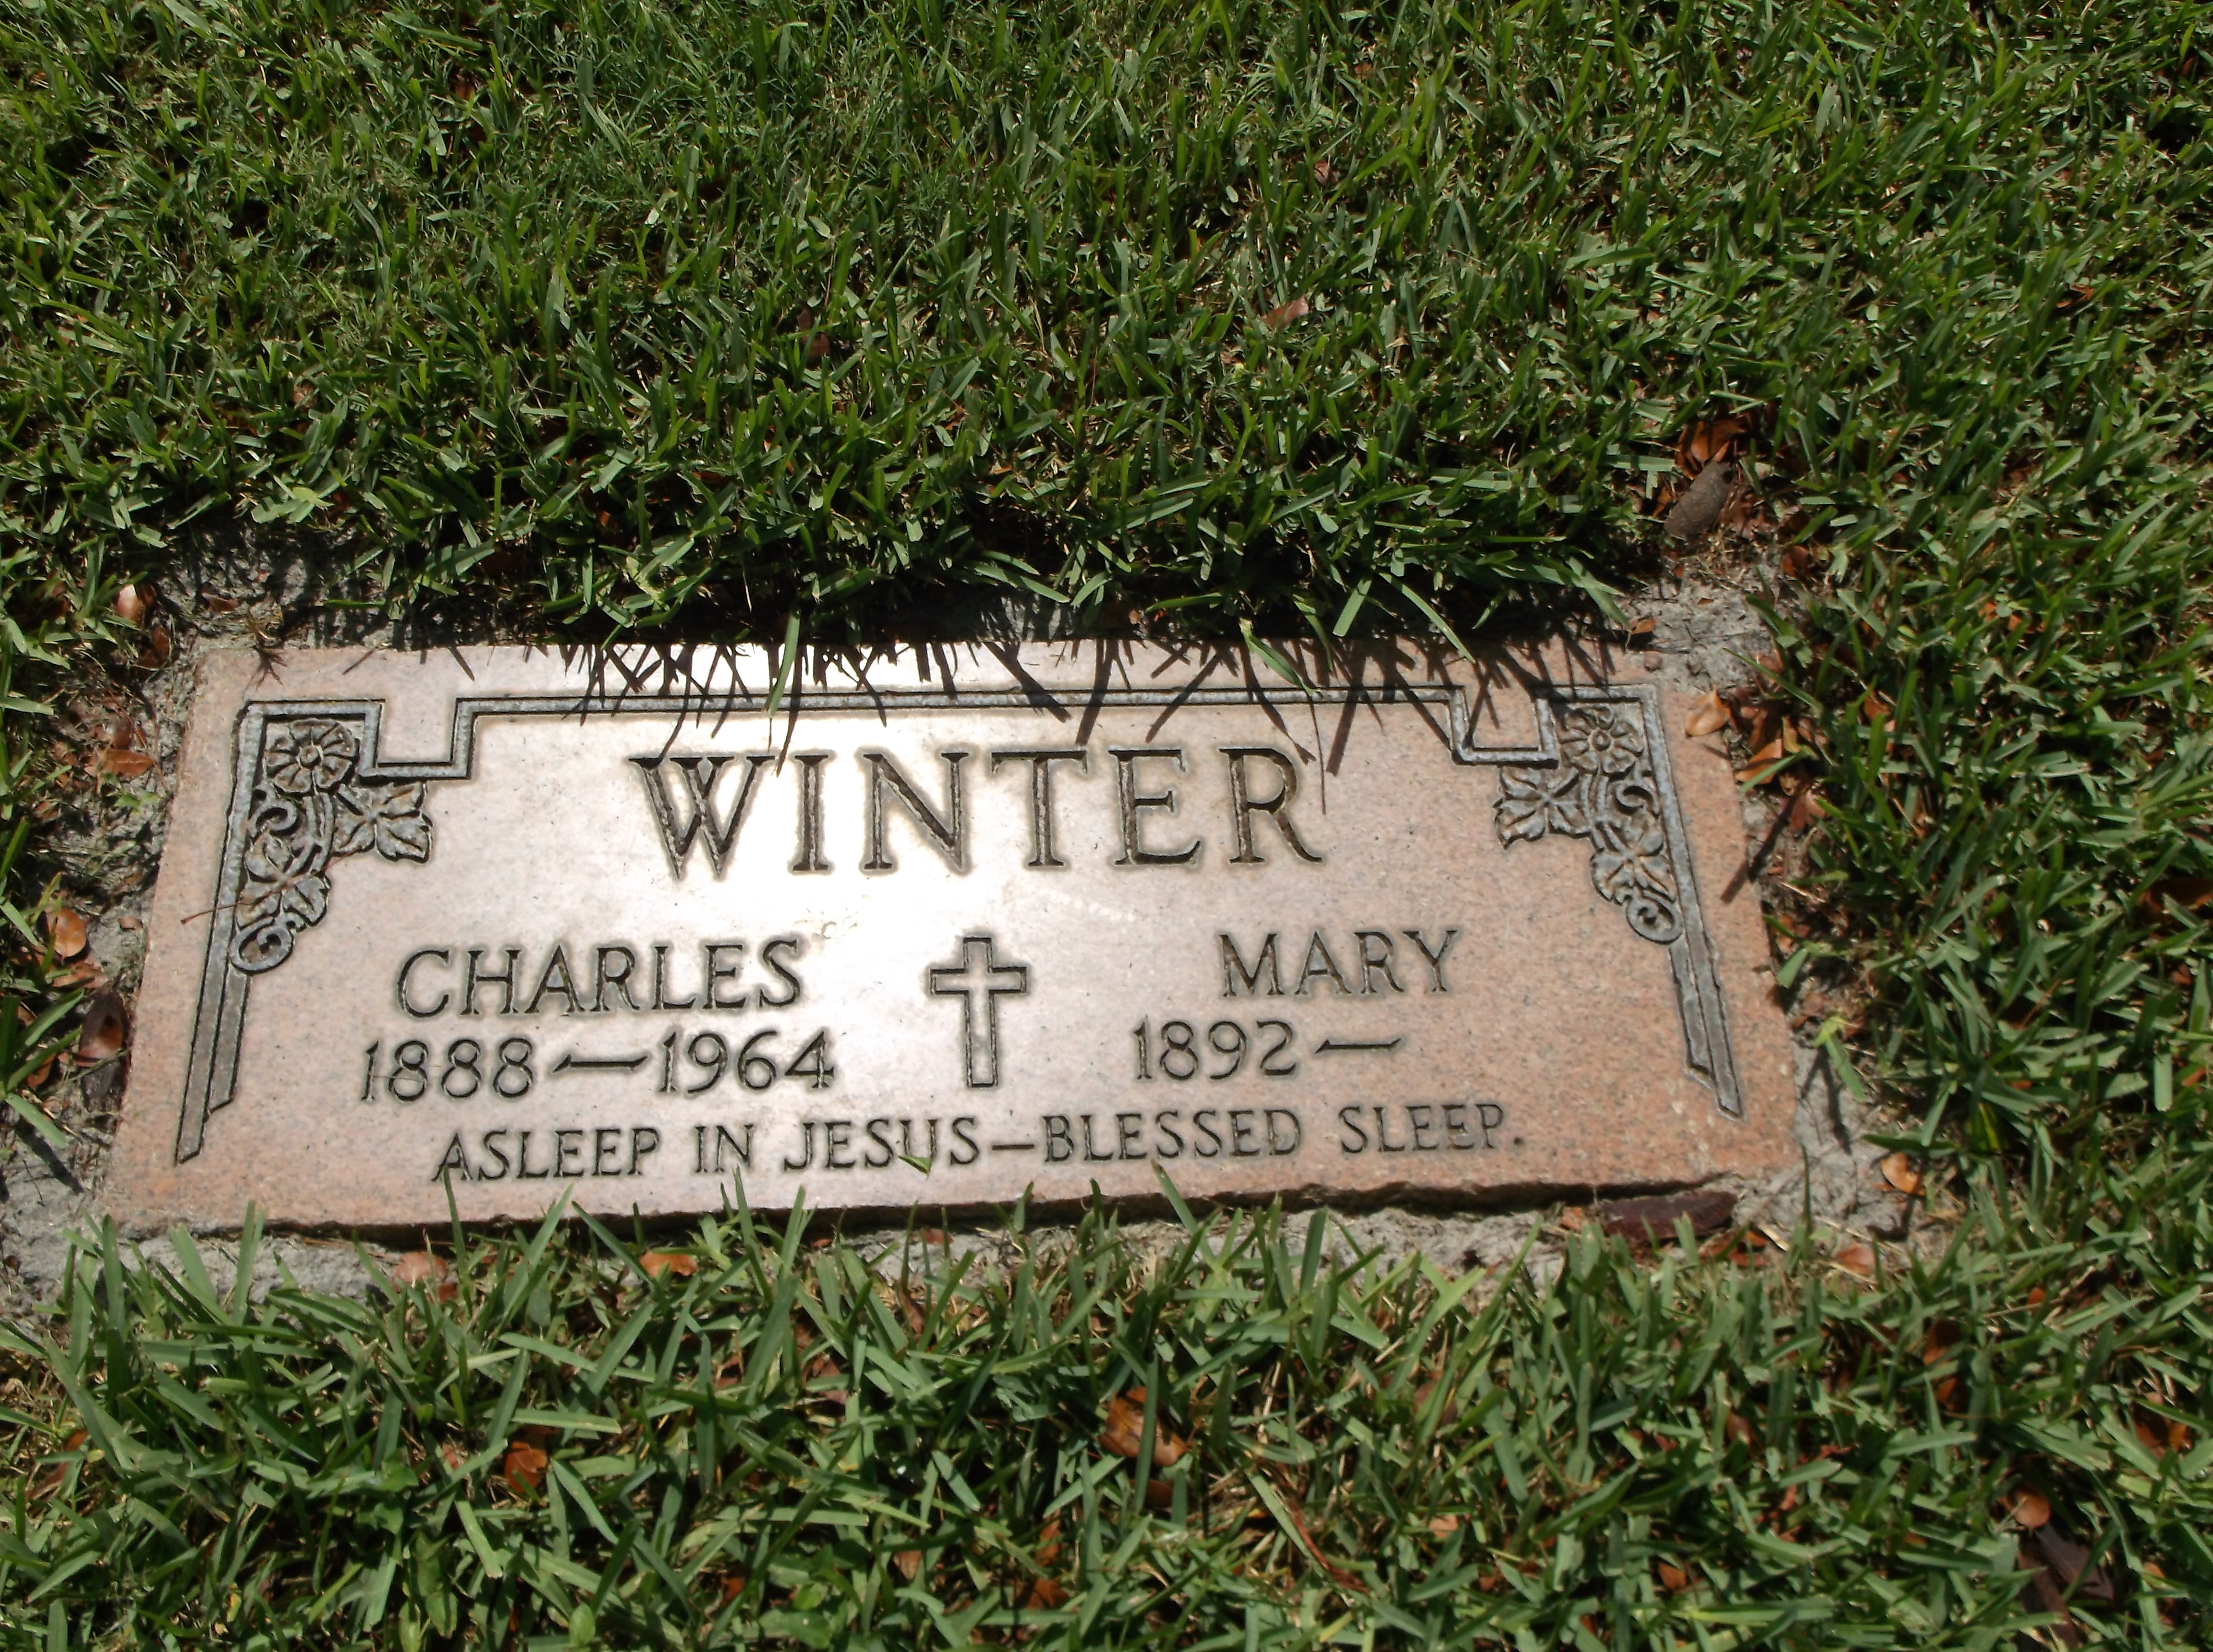 Charles Winter